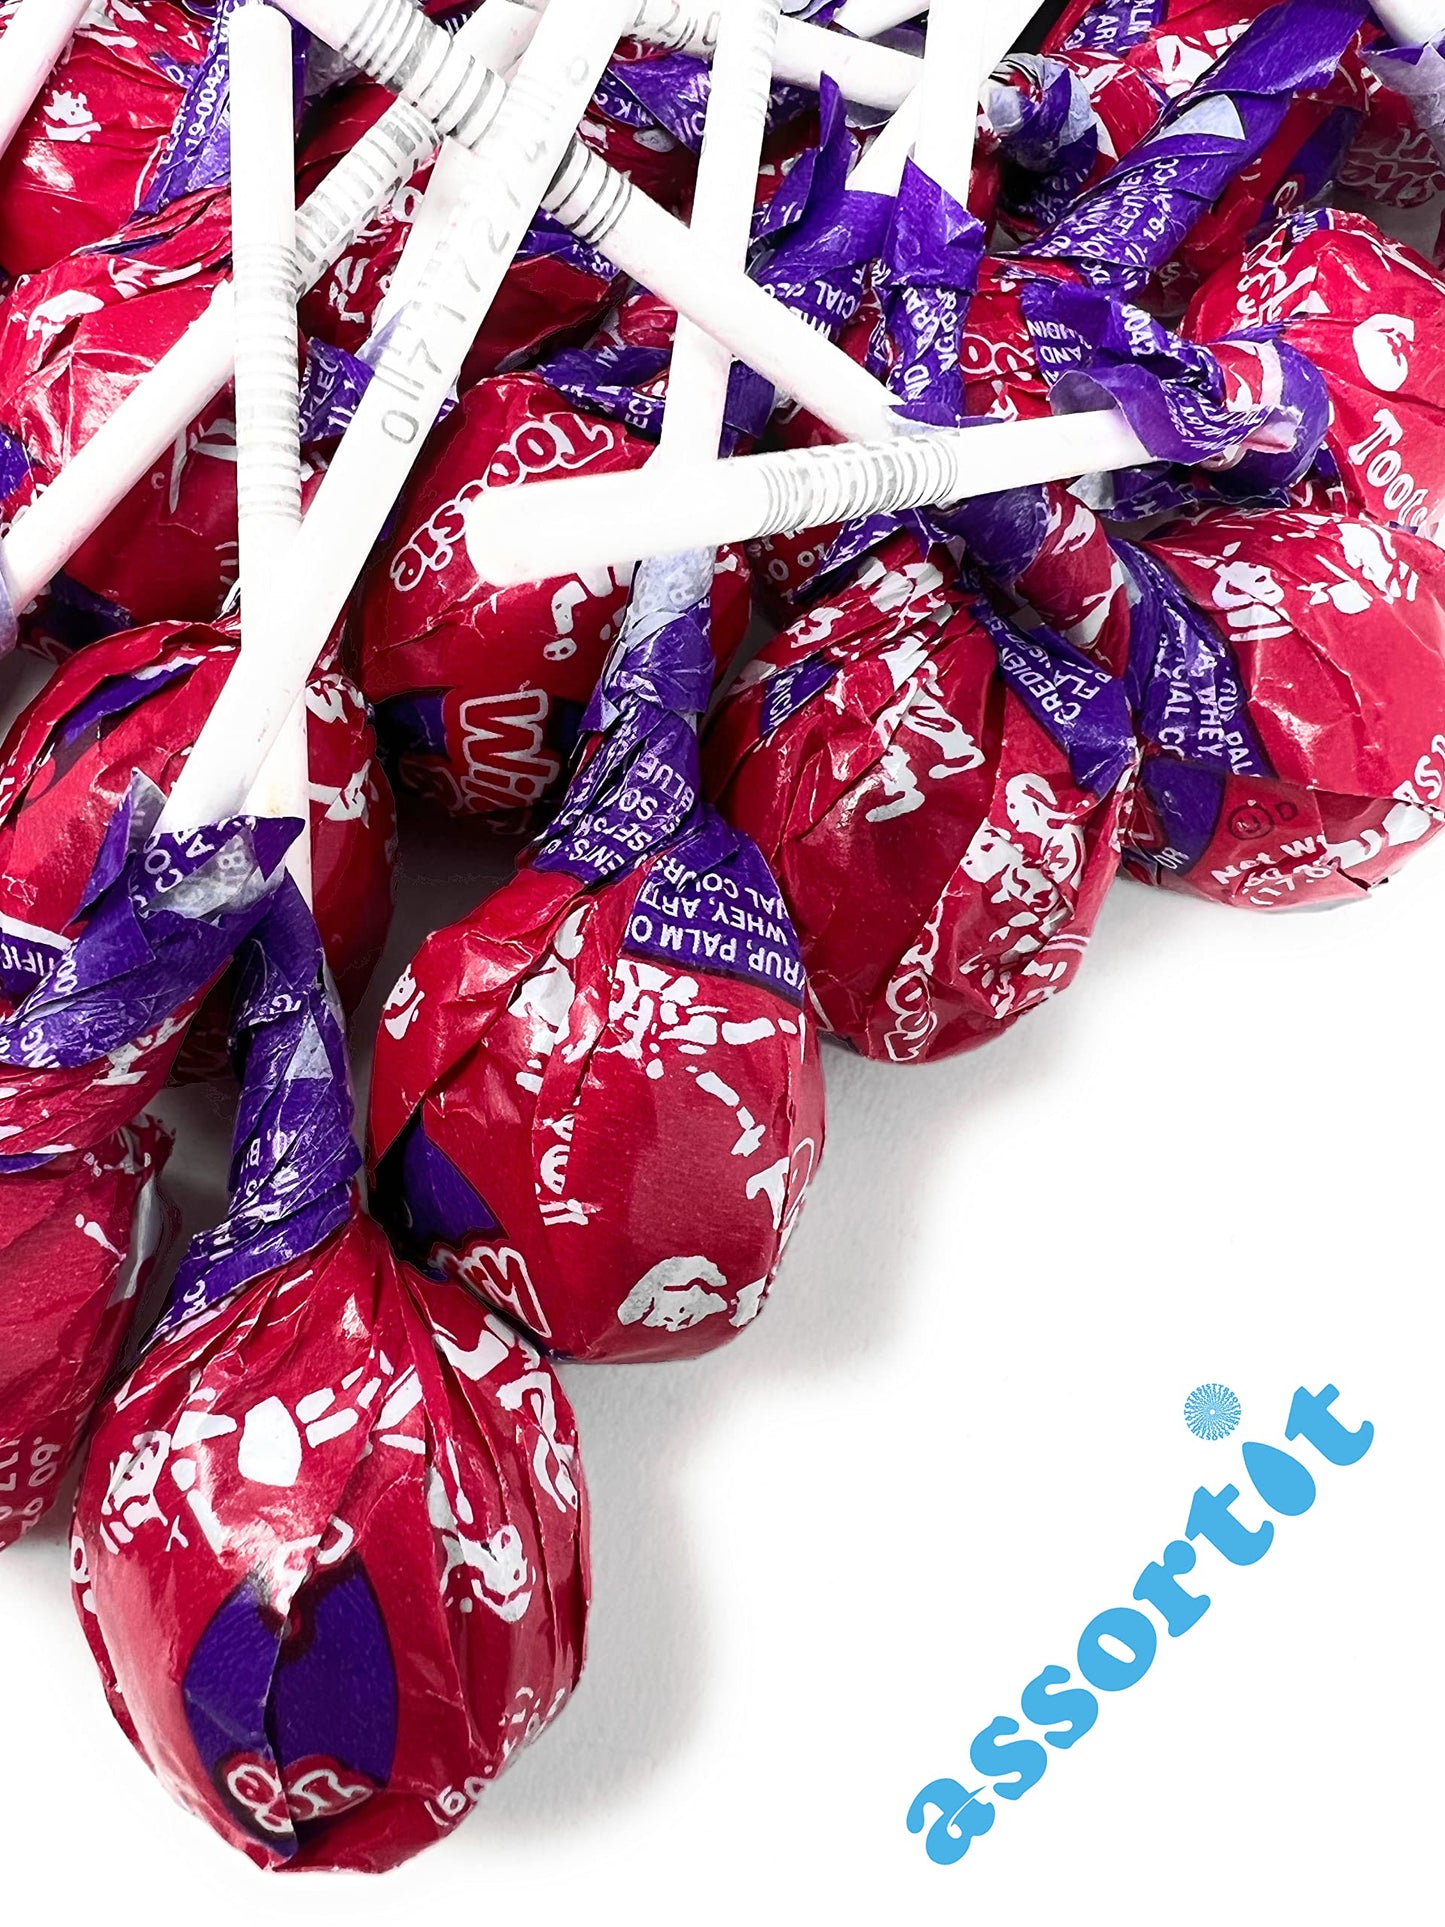 Cherry Lollipop Assortment - 2 lbs - Wild Cherry Berry Tootsie Pops with Tootsie Roll Center 32 oz.